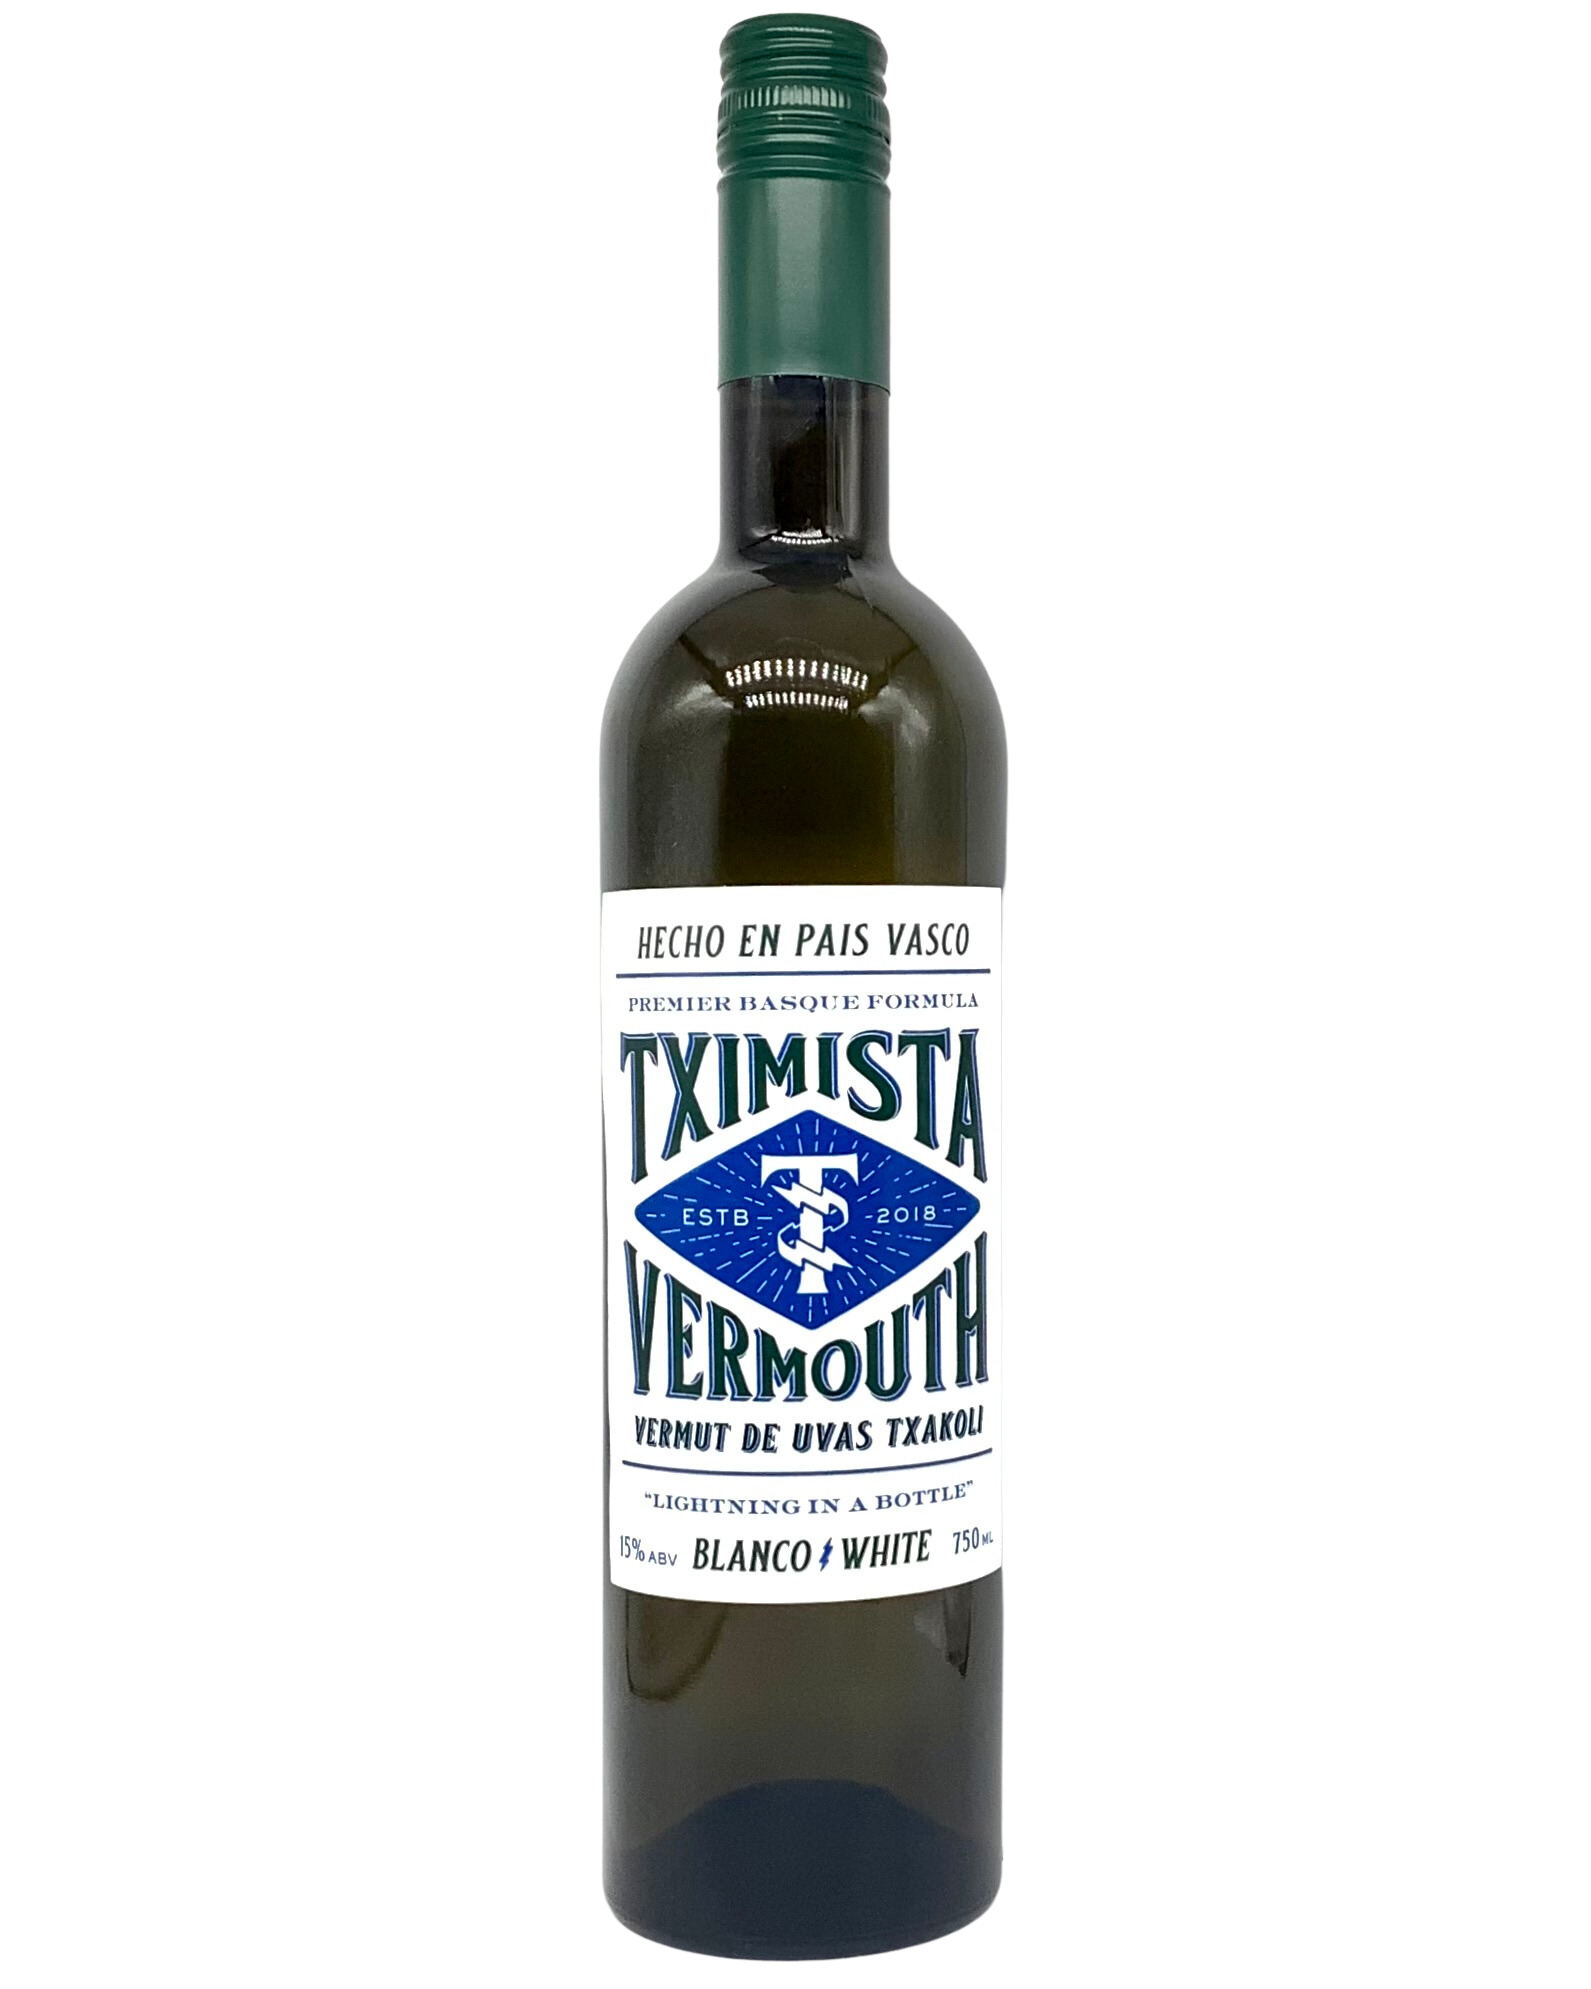 Tximista White Vermouth, Basque Country, Spain newarrival